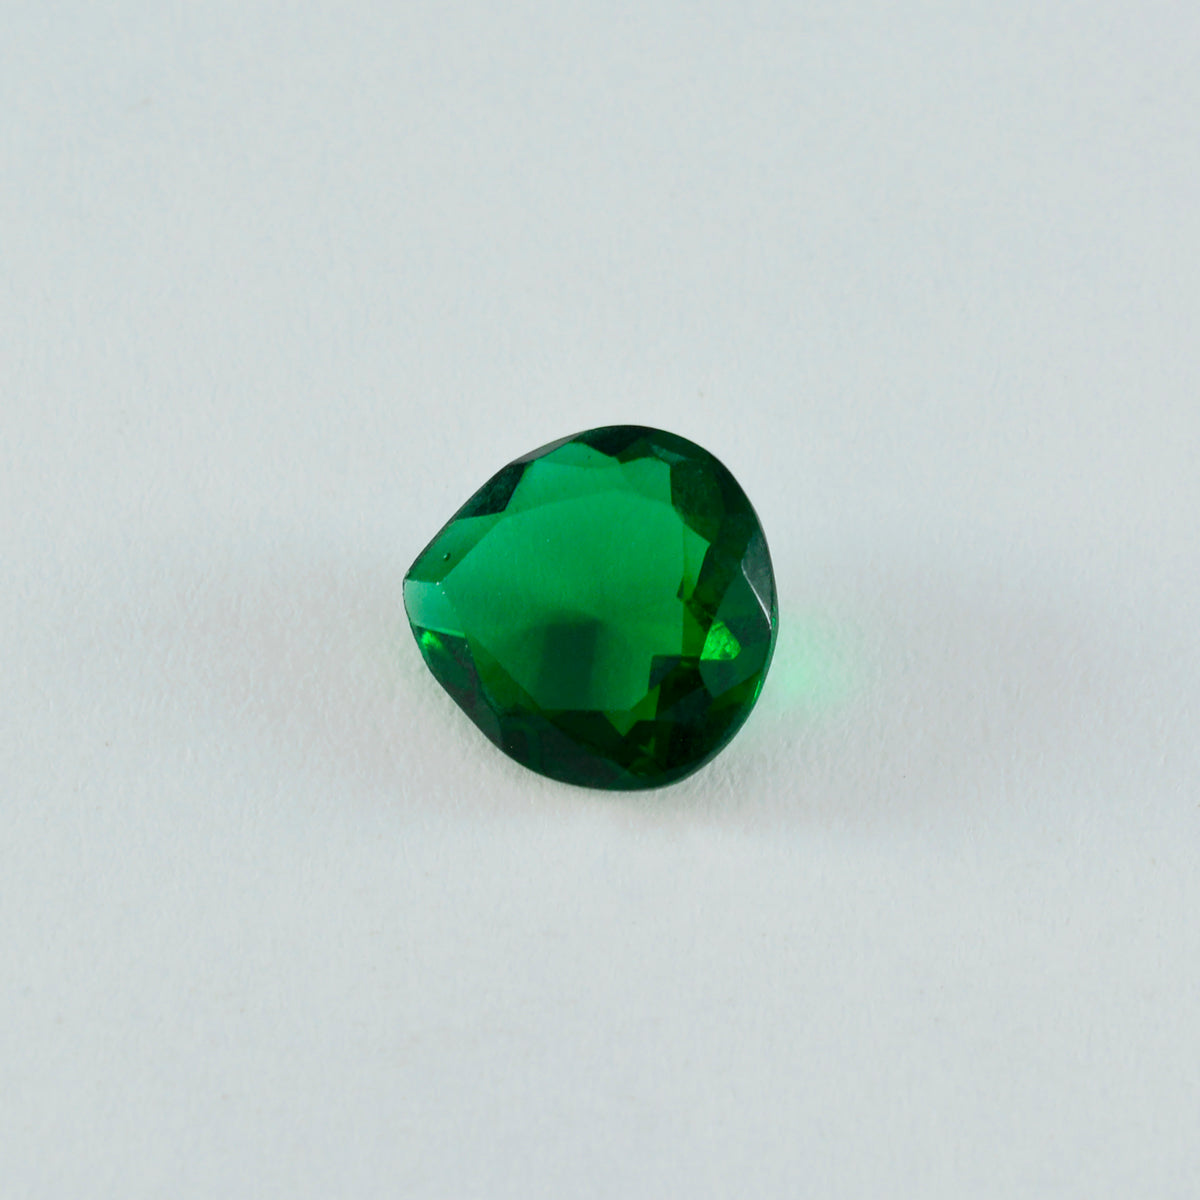 Riyogems 1PC Green Emerald CZ Faceted 12x12 mm Heart Shape wonderful Quality Loose Stone